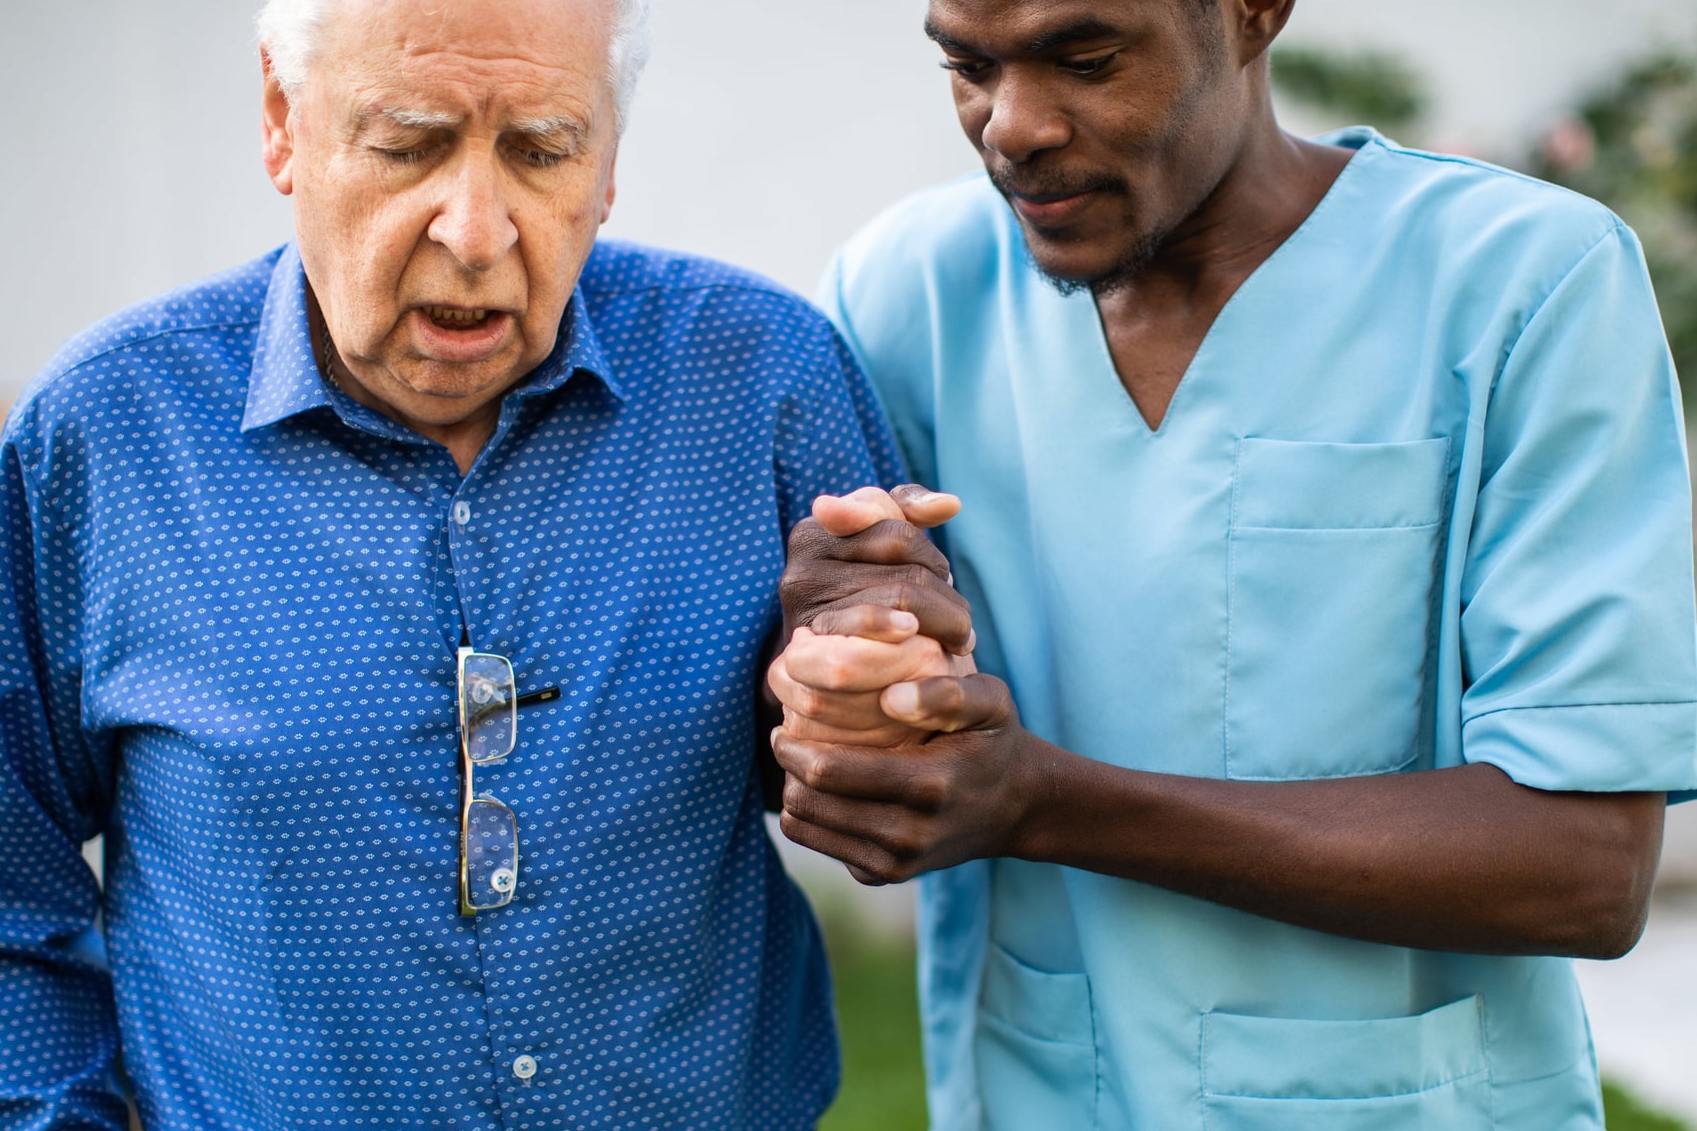 Black male nurse assisting senior man to walk outdoors